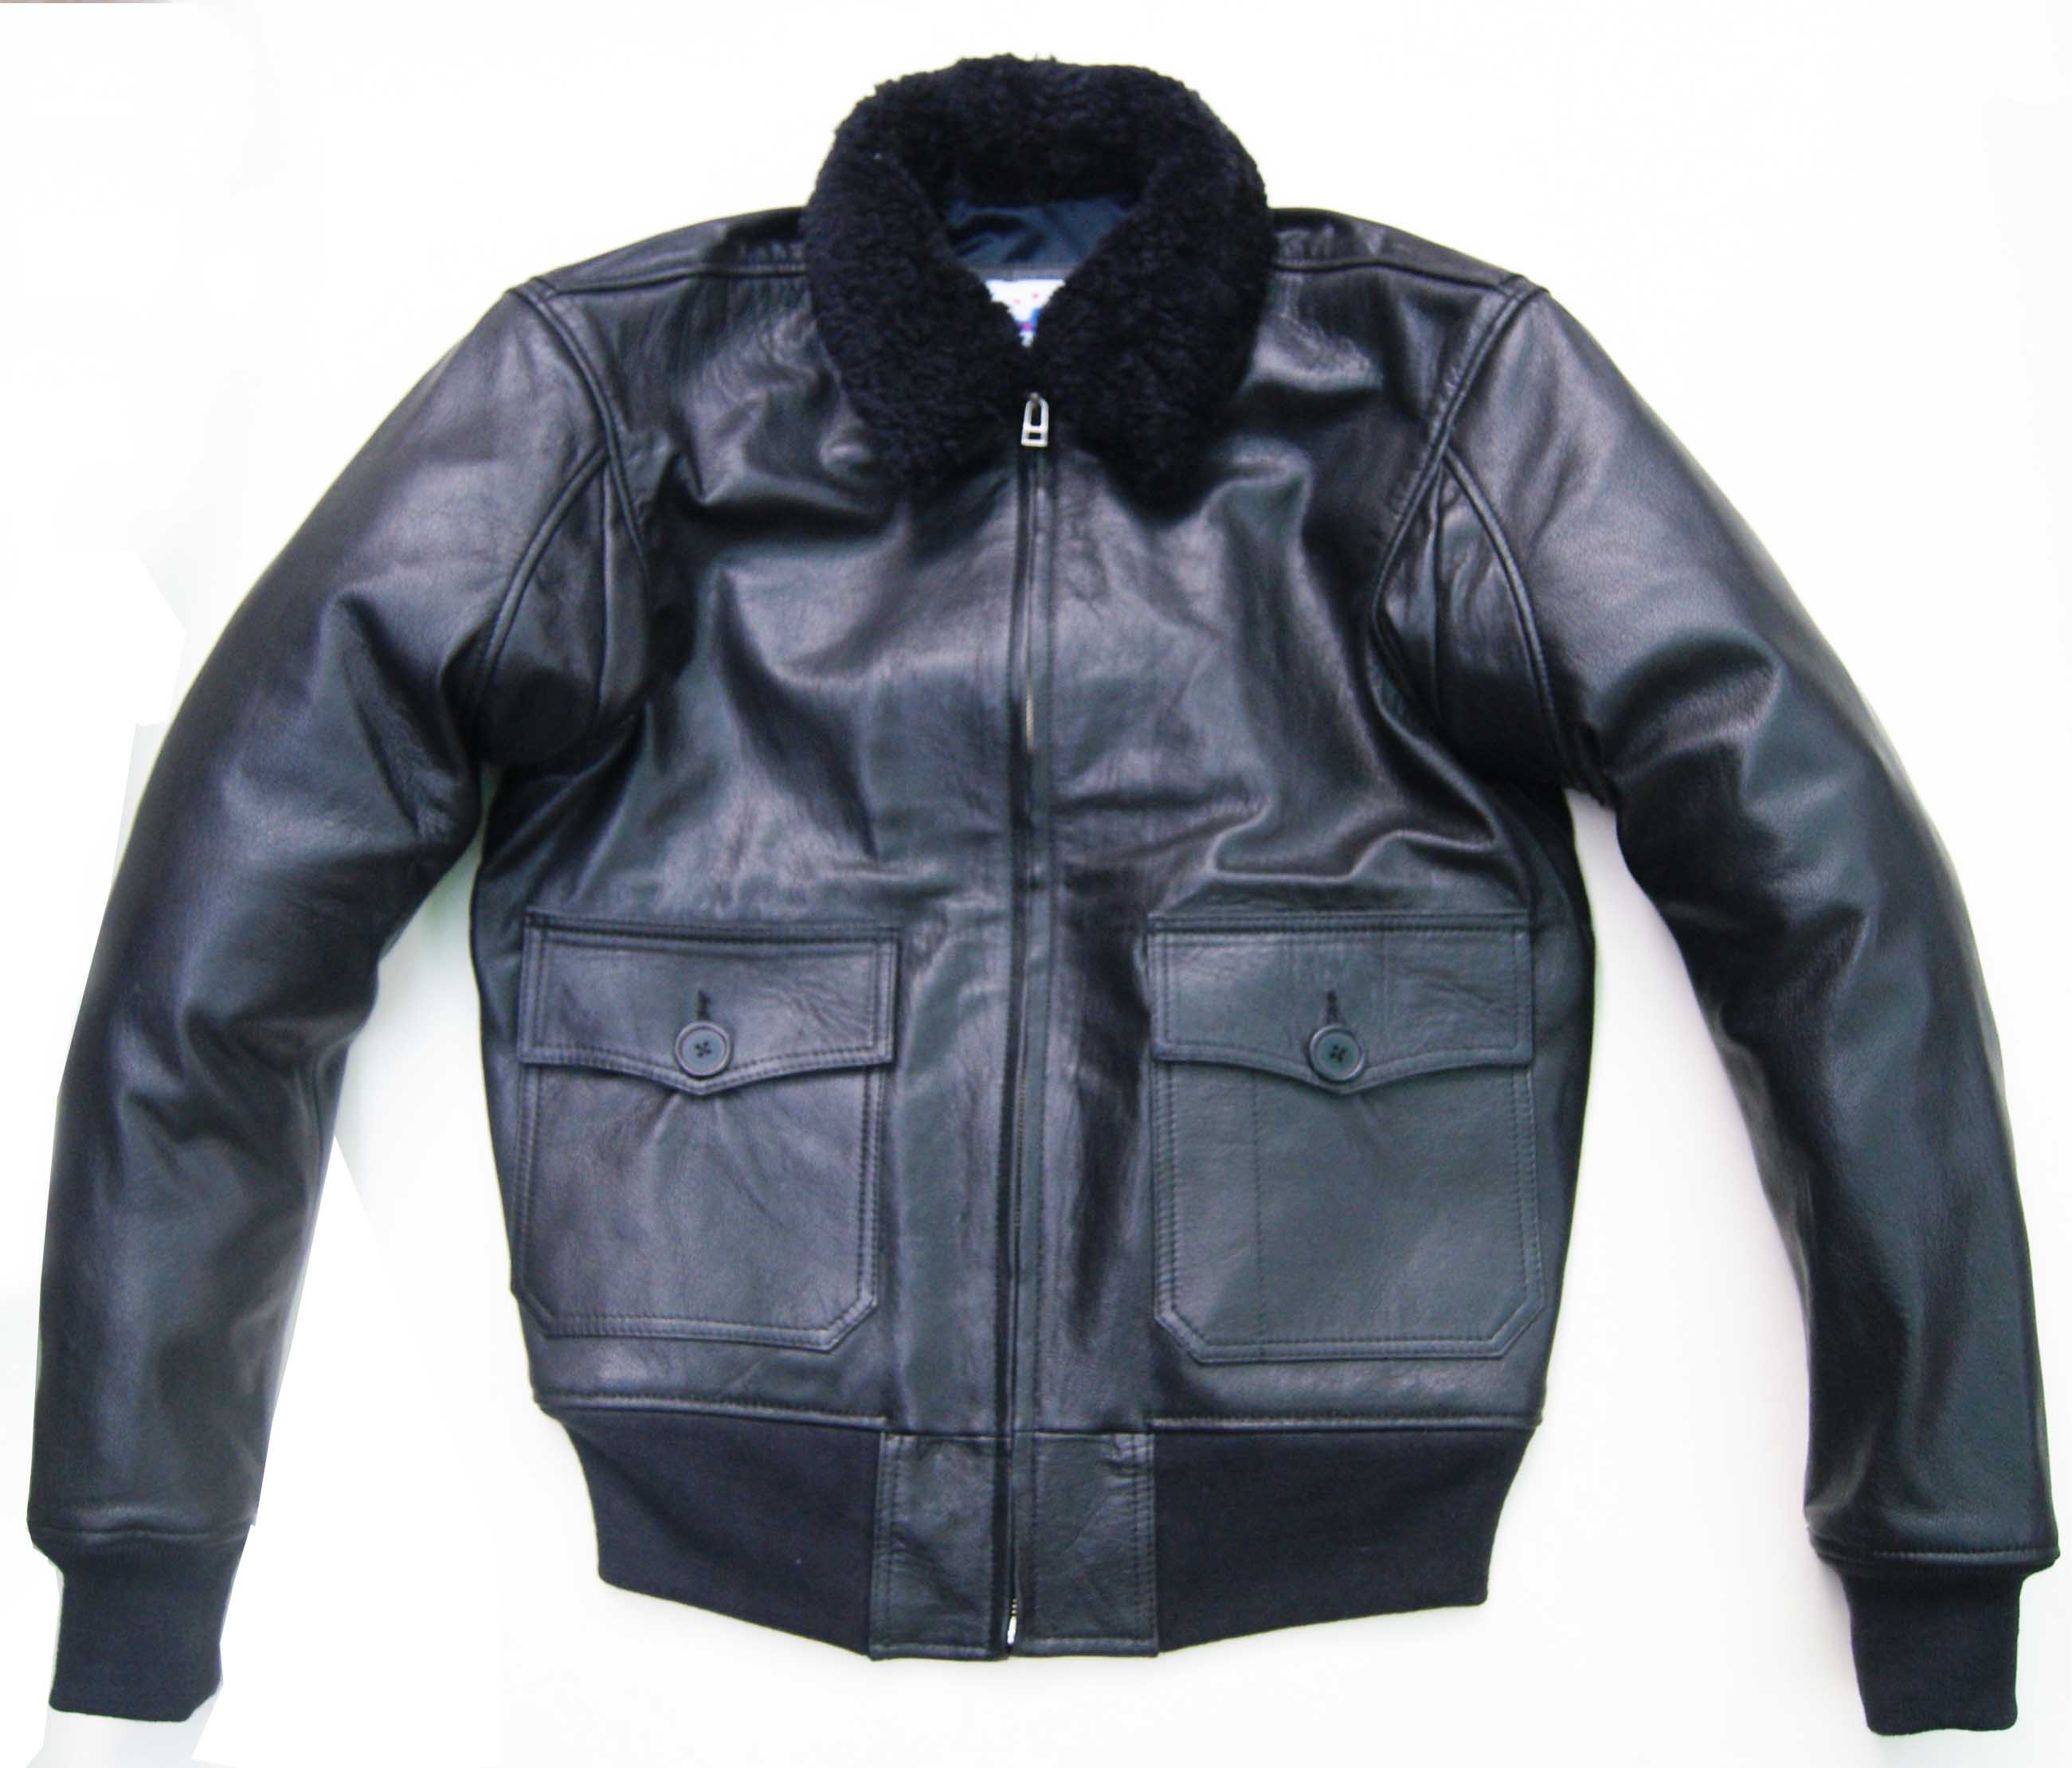 FIVESTAR LEATHER G1 JACKET | Page 7 | Vintage Leather Jackets Forum